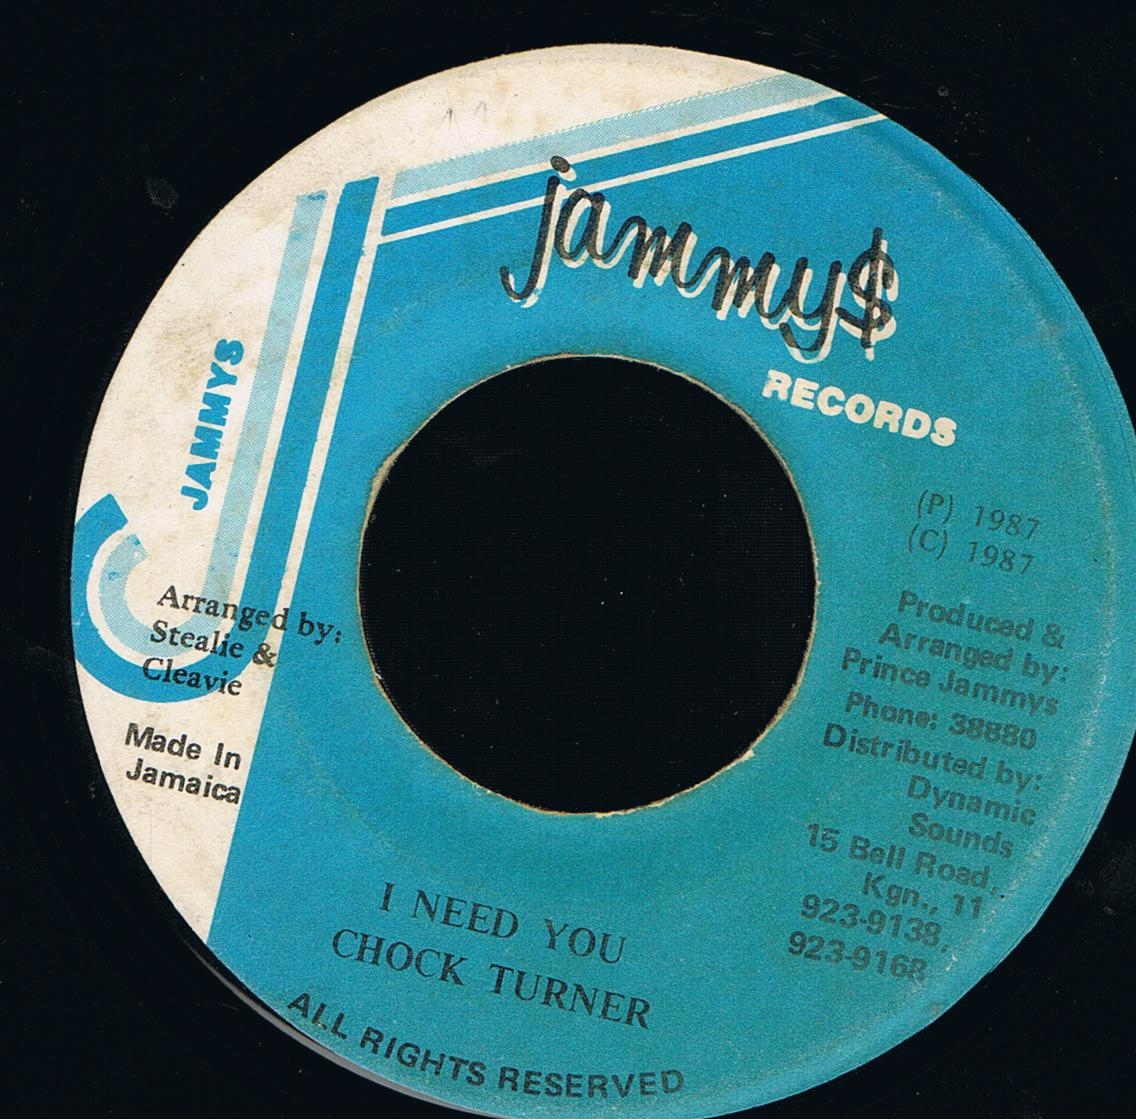 Chuck Turner - I Need You (7")